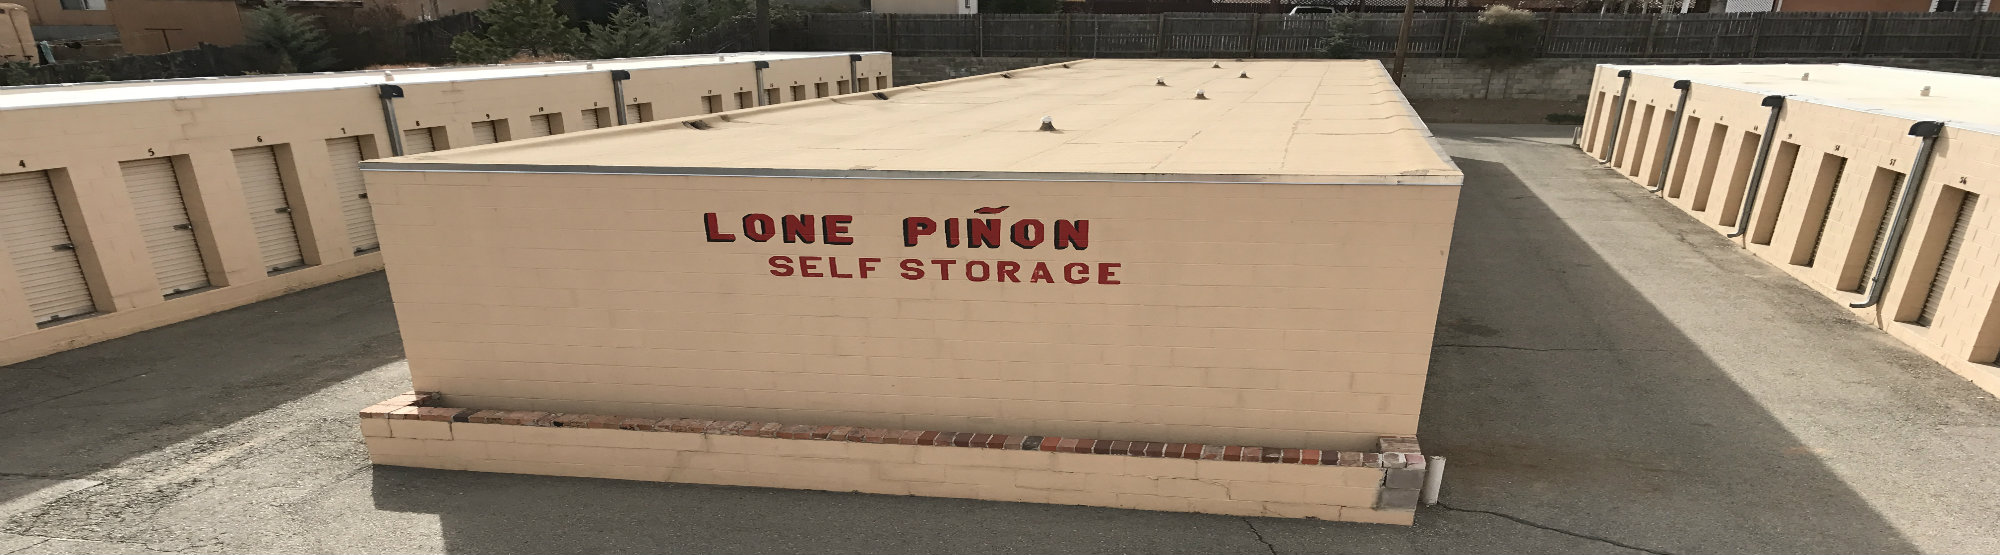 Lone Pinon Self Storage in NM